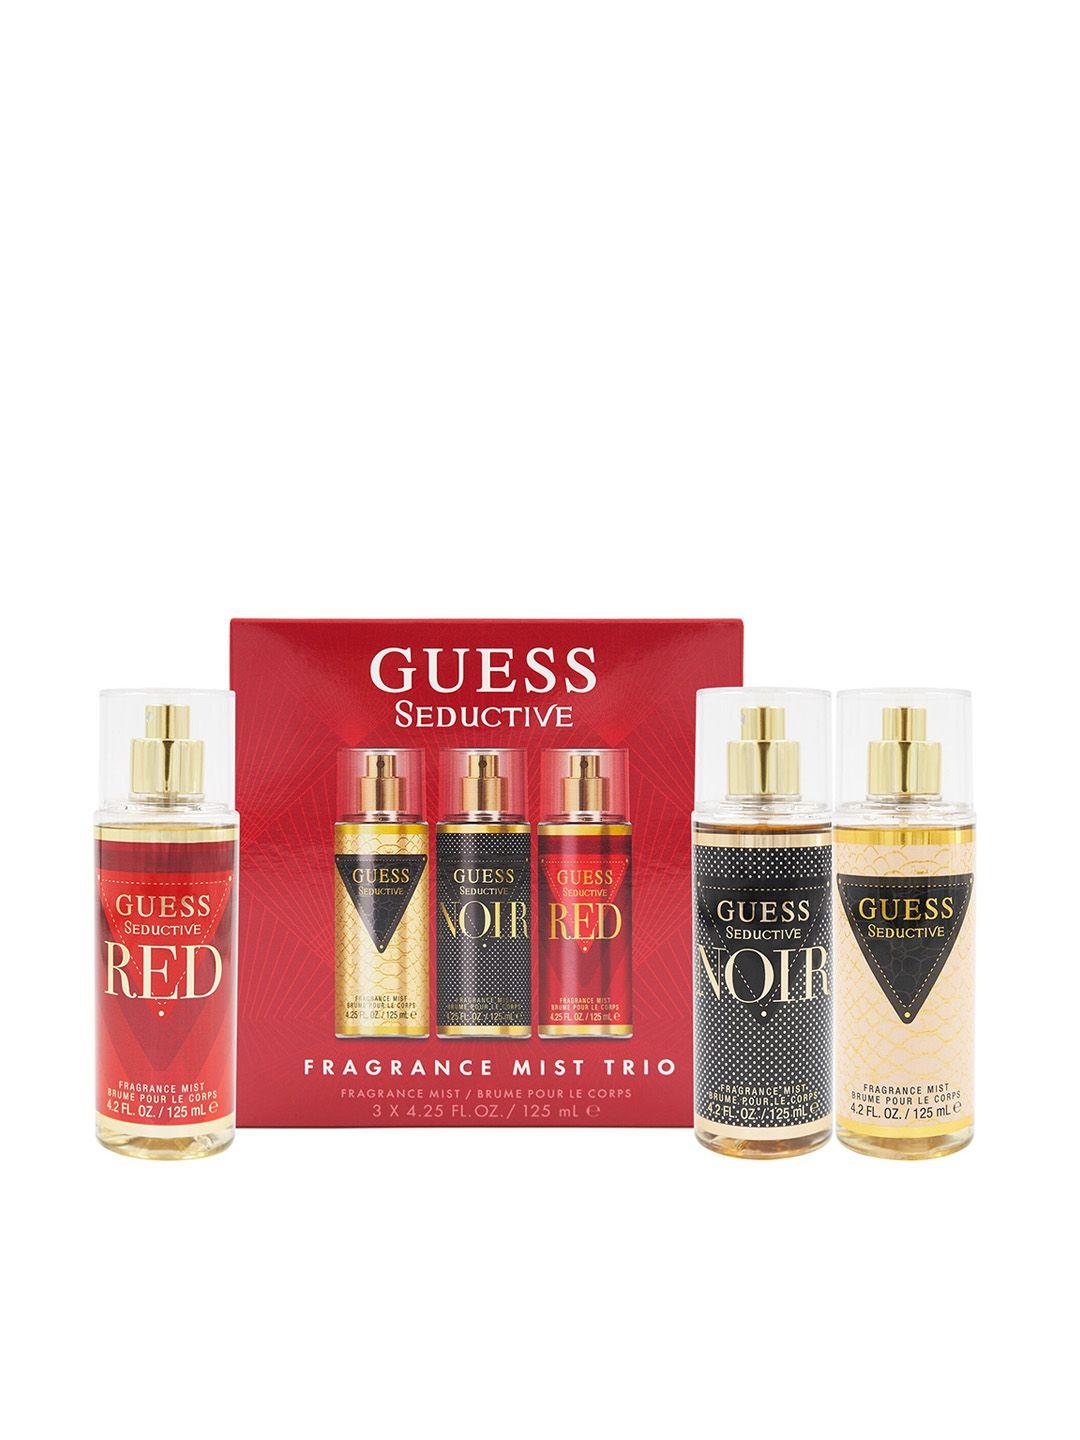 guess seductive fragrance mist trio 125ml each - seductive + noir + red